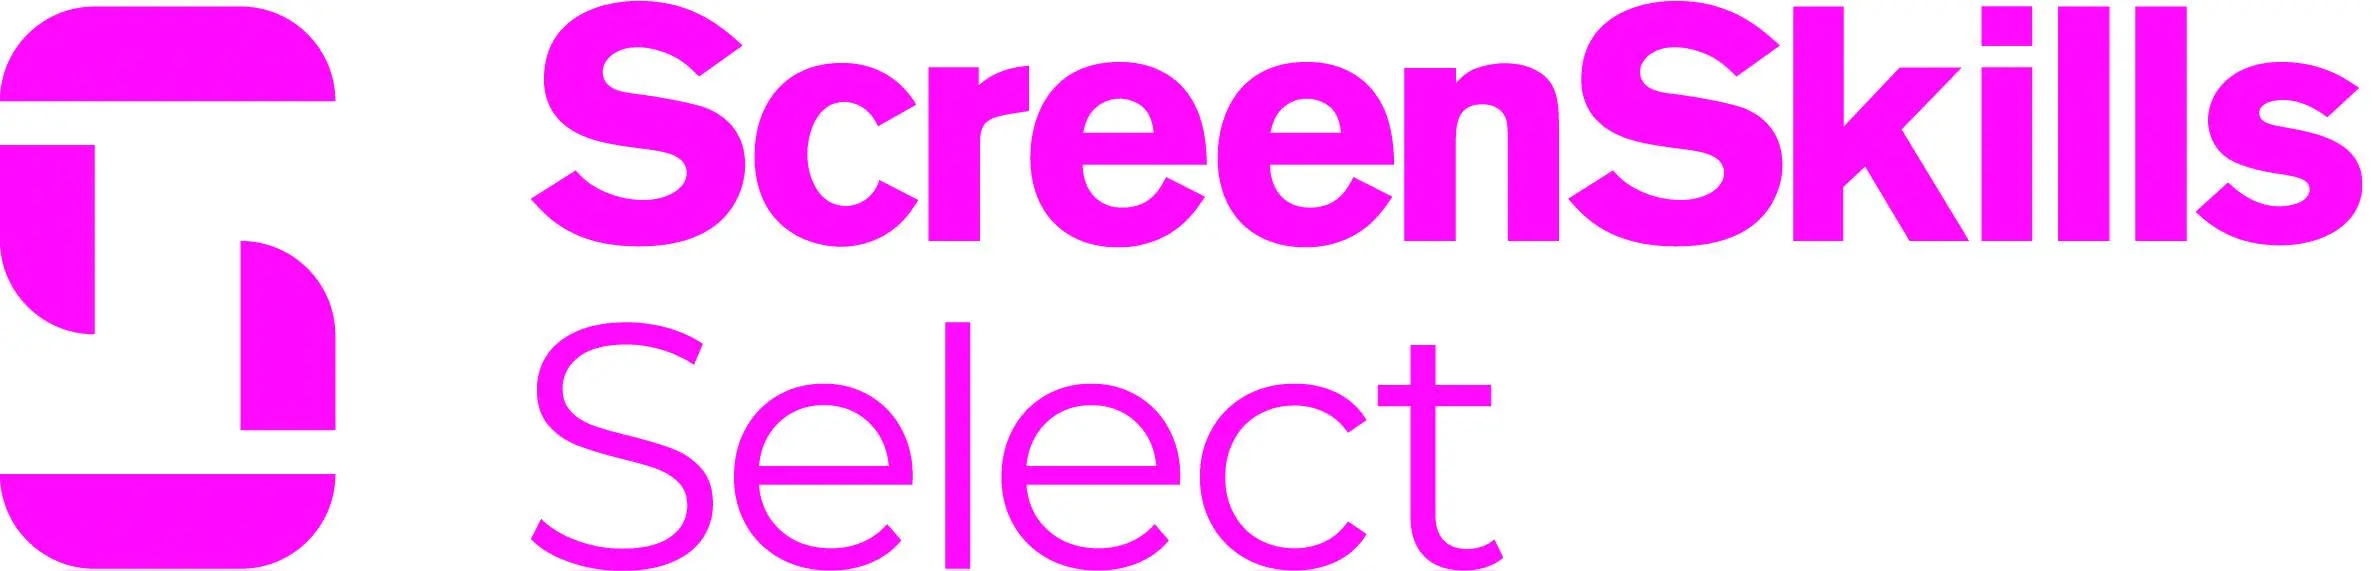 Screenskills select logo